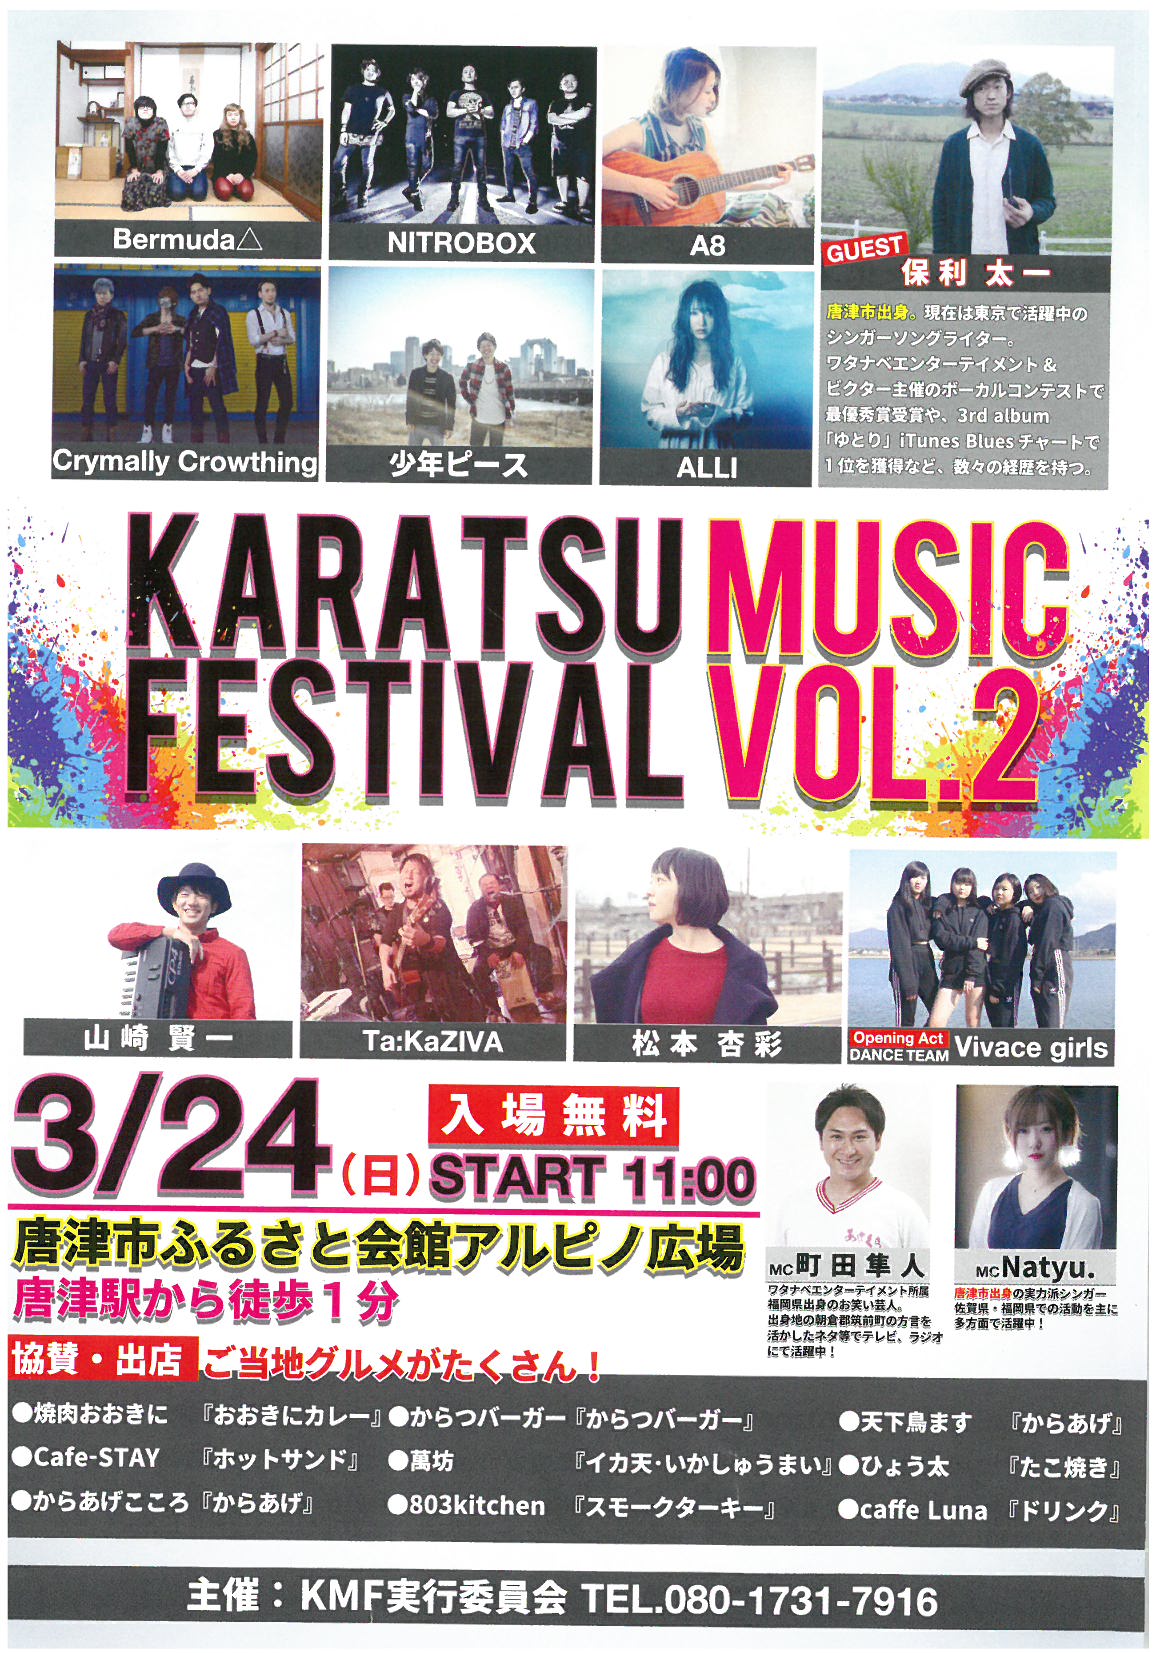 3/24(日)KARATSU MUSIC FESTIVAL VOL.2